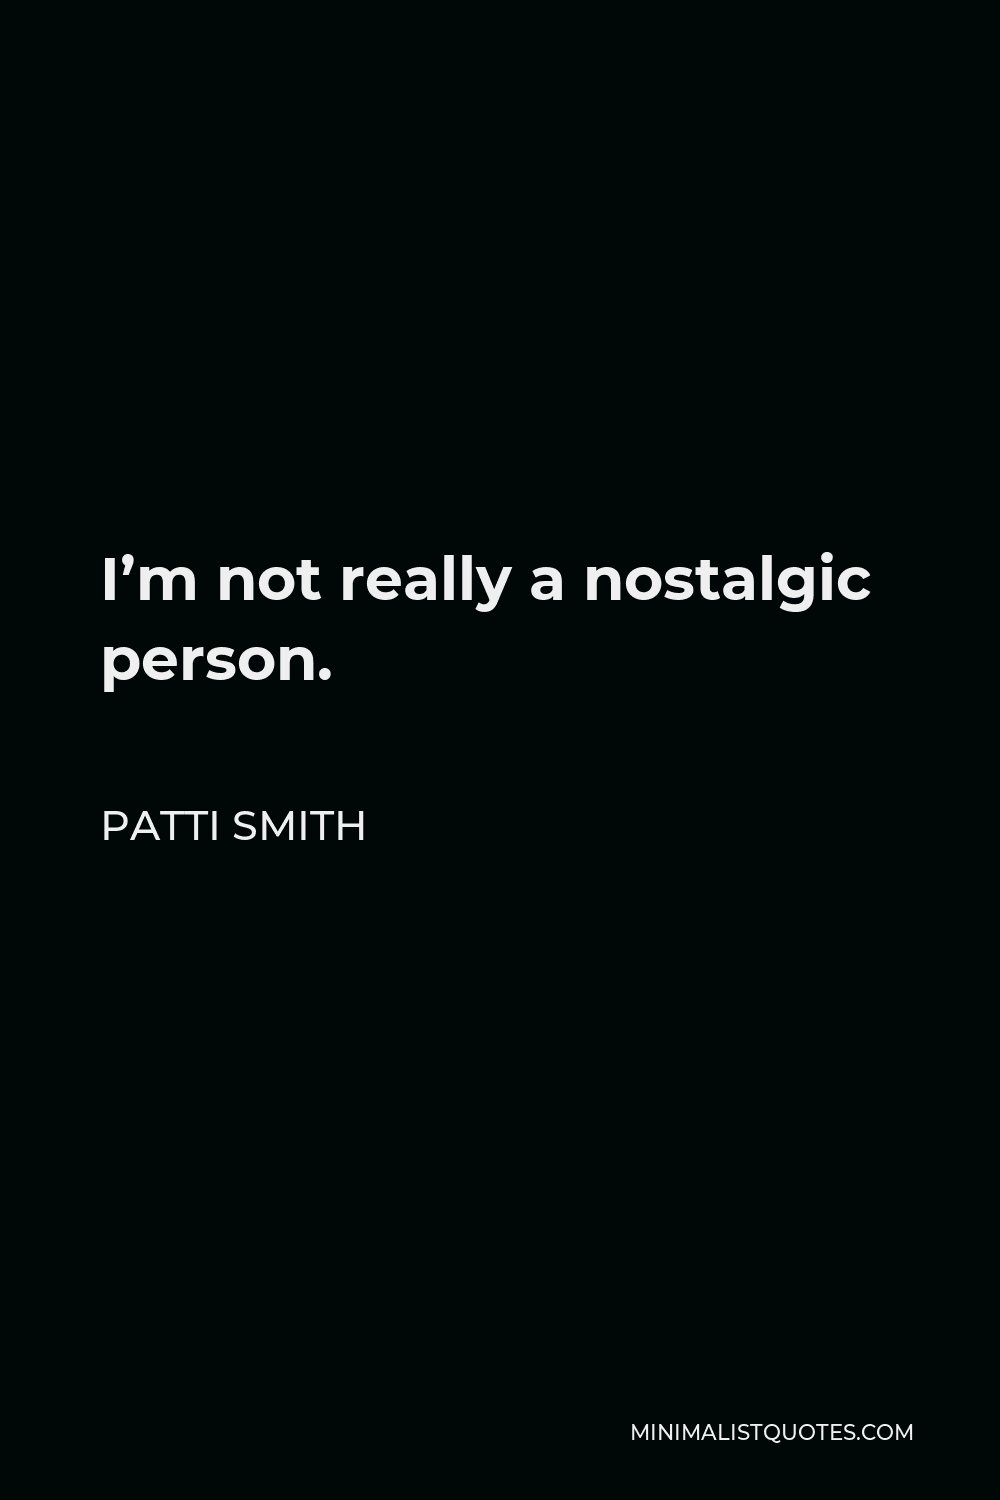 Patti Smith Quote - I’m not really a nostalgic person.